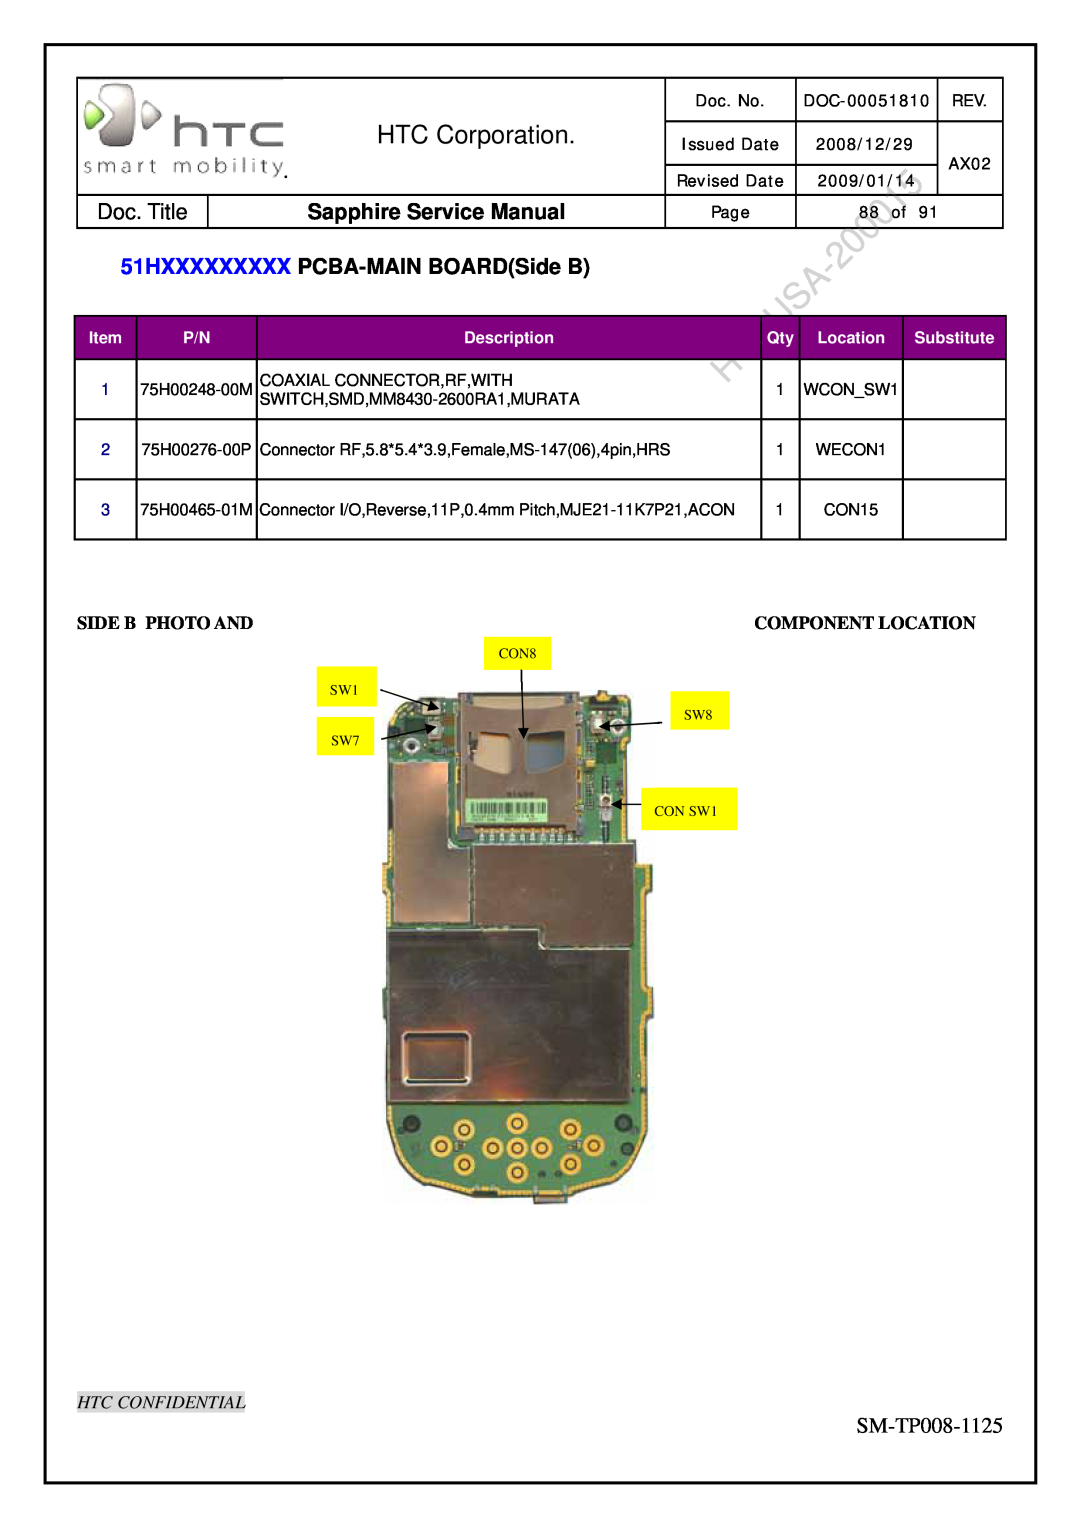 HTC SM-TP008-1125 51HXXXXXXXXX PCBA-MAIN BOARDSide B, HTC Corporation, Sapphire Service Manual, Side B Photo And, Doc. No 